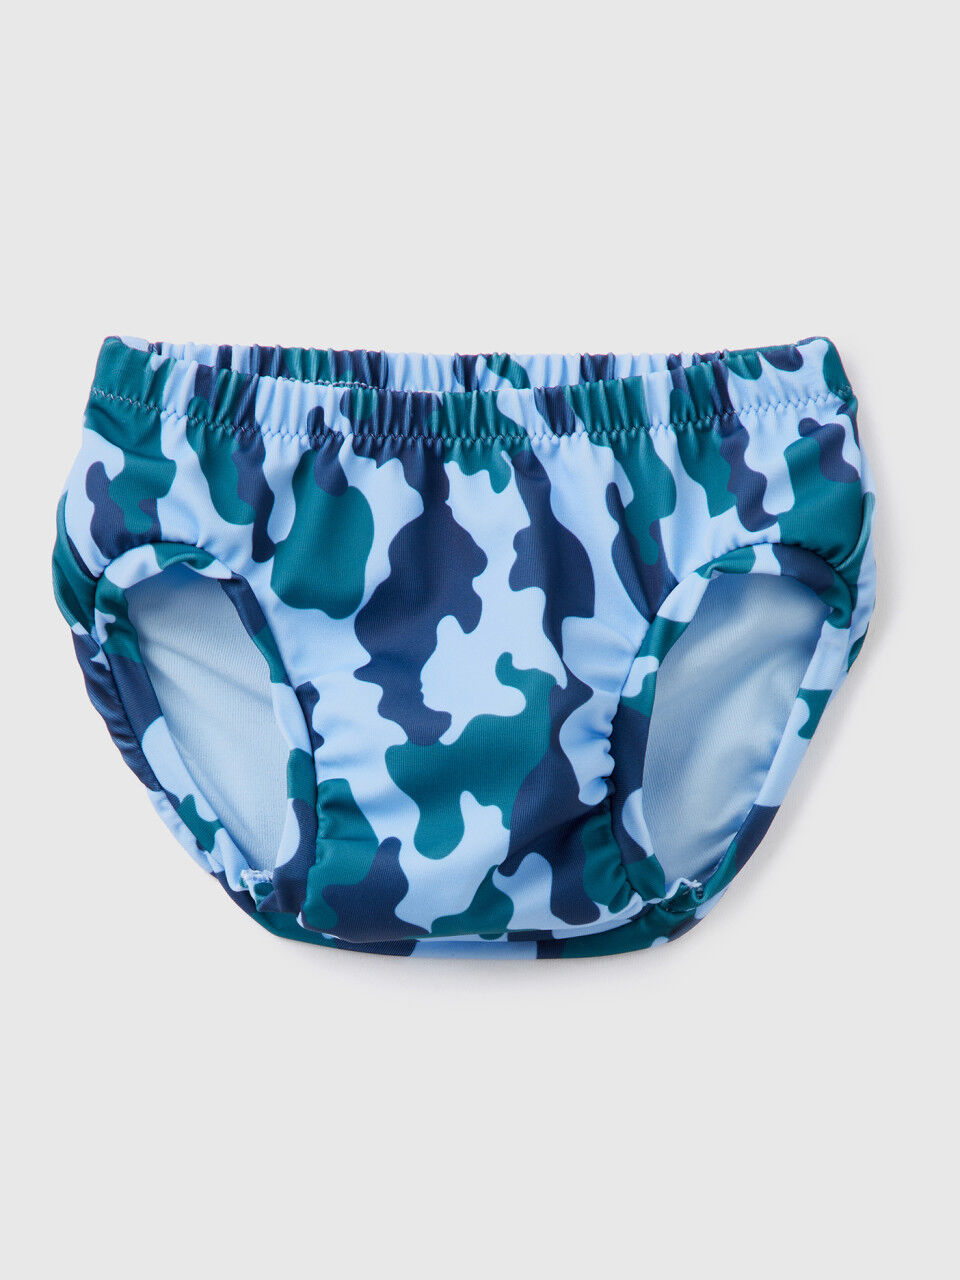 Camouflage swim bottoms